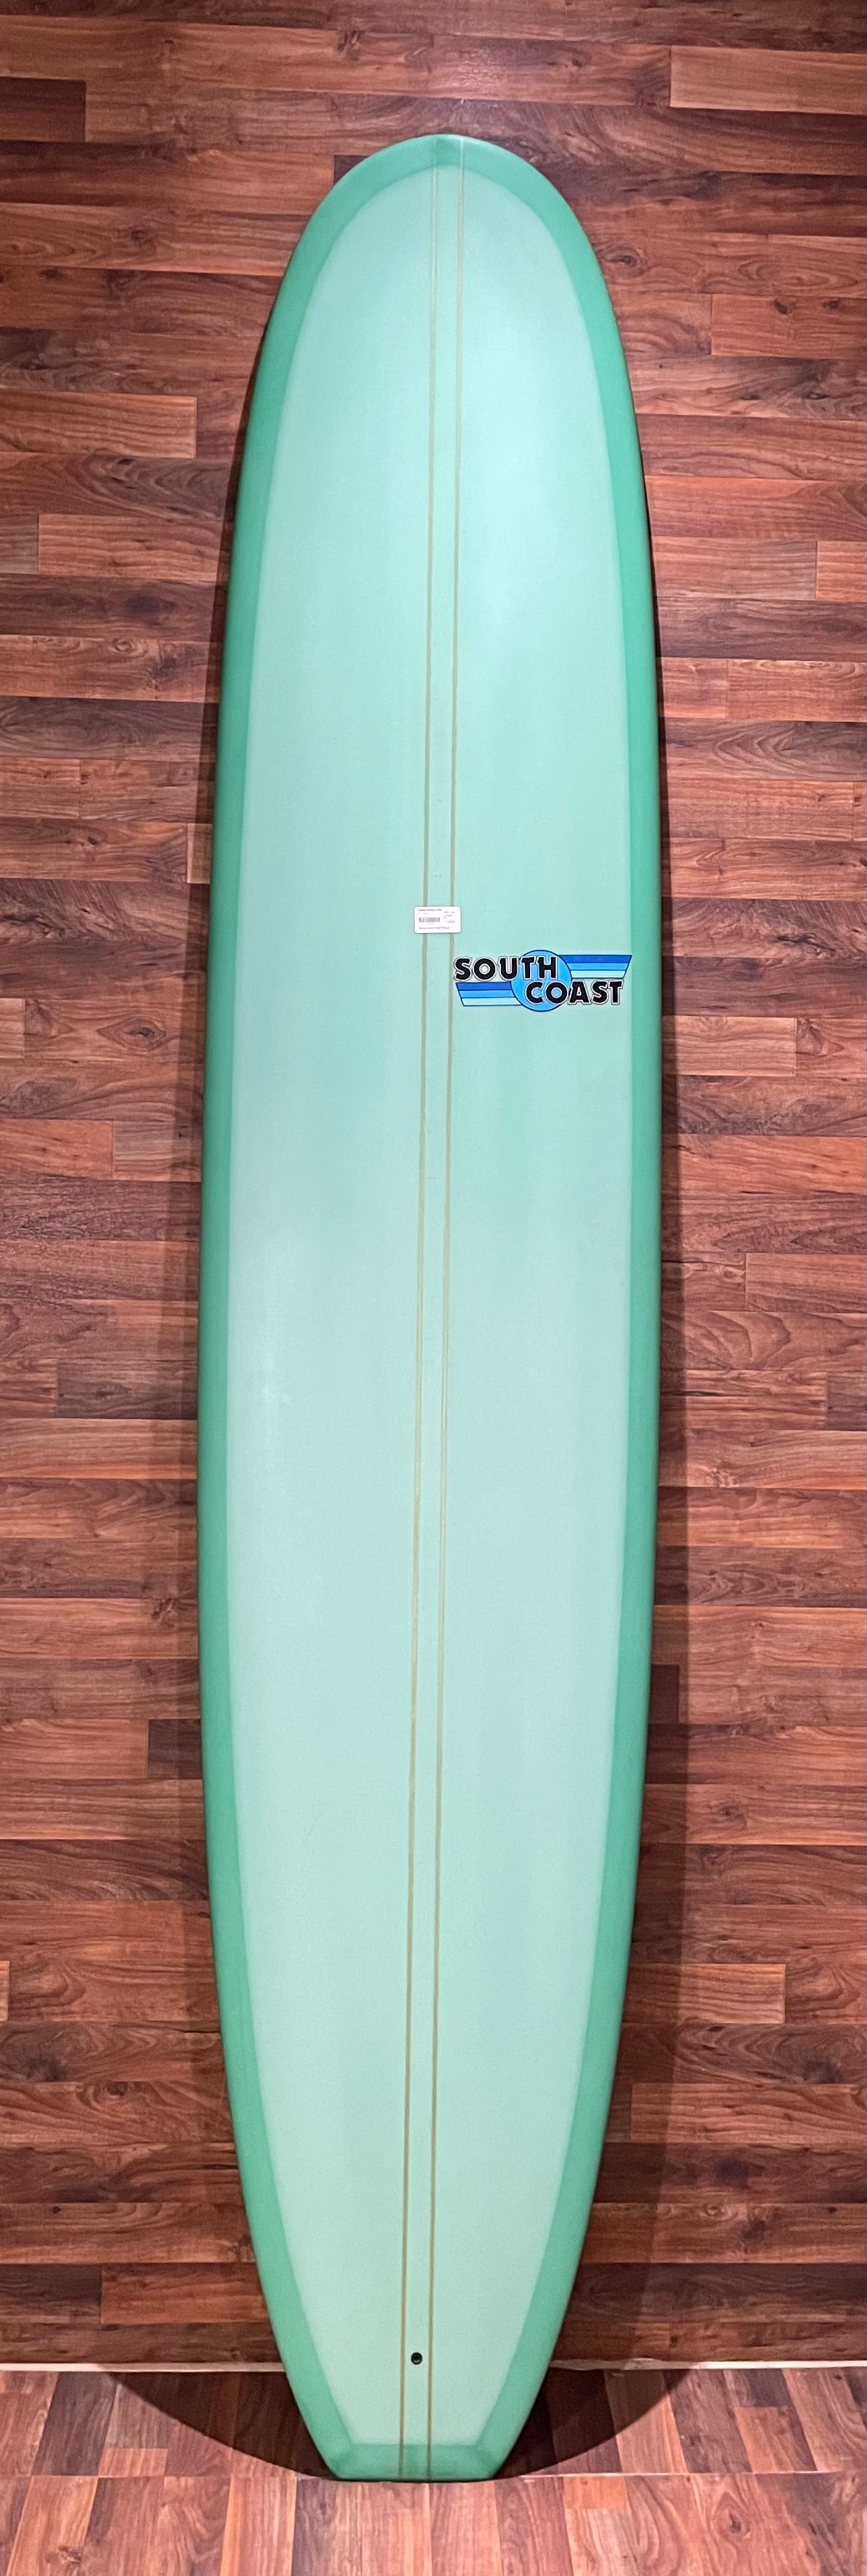 South Coast Tall Can 9™4� Surfboard